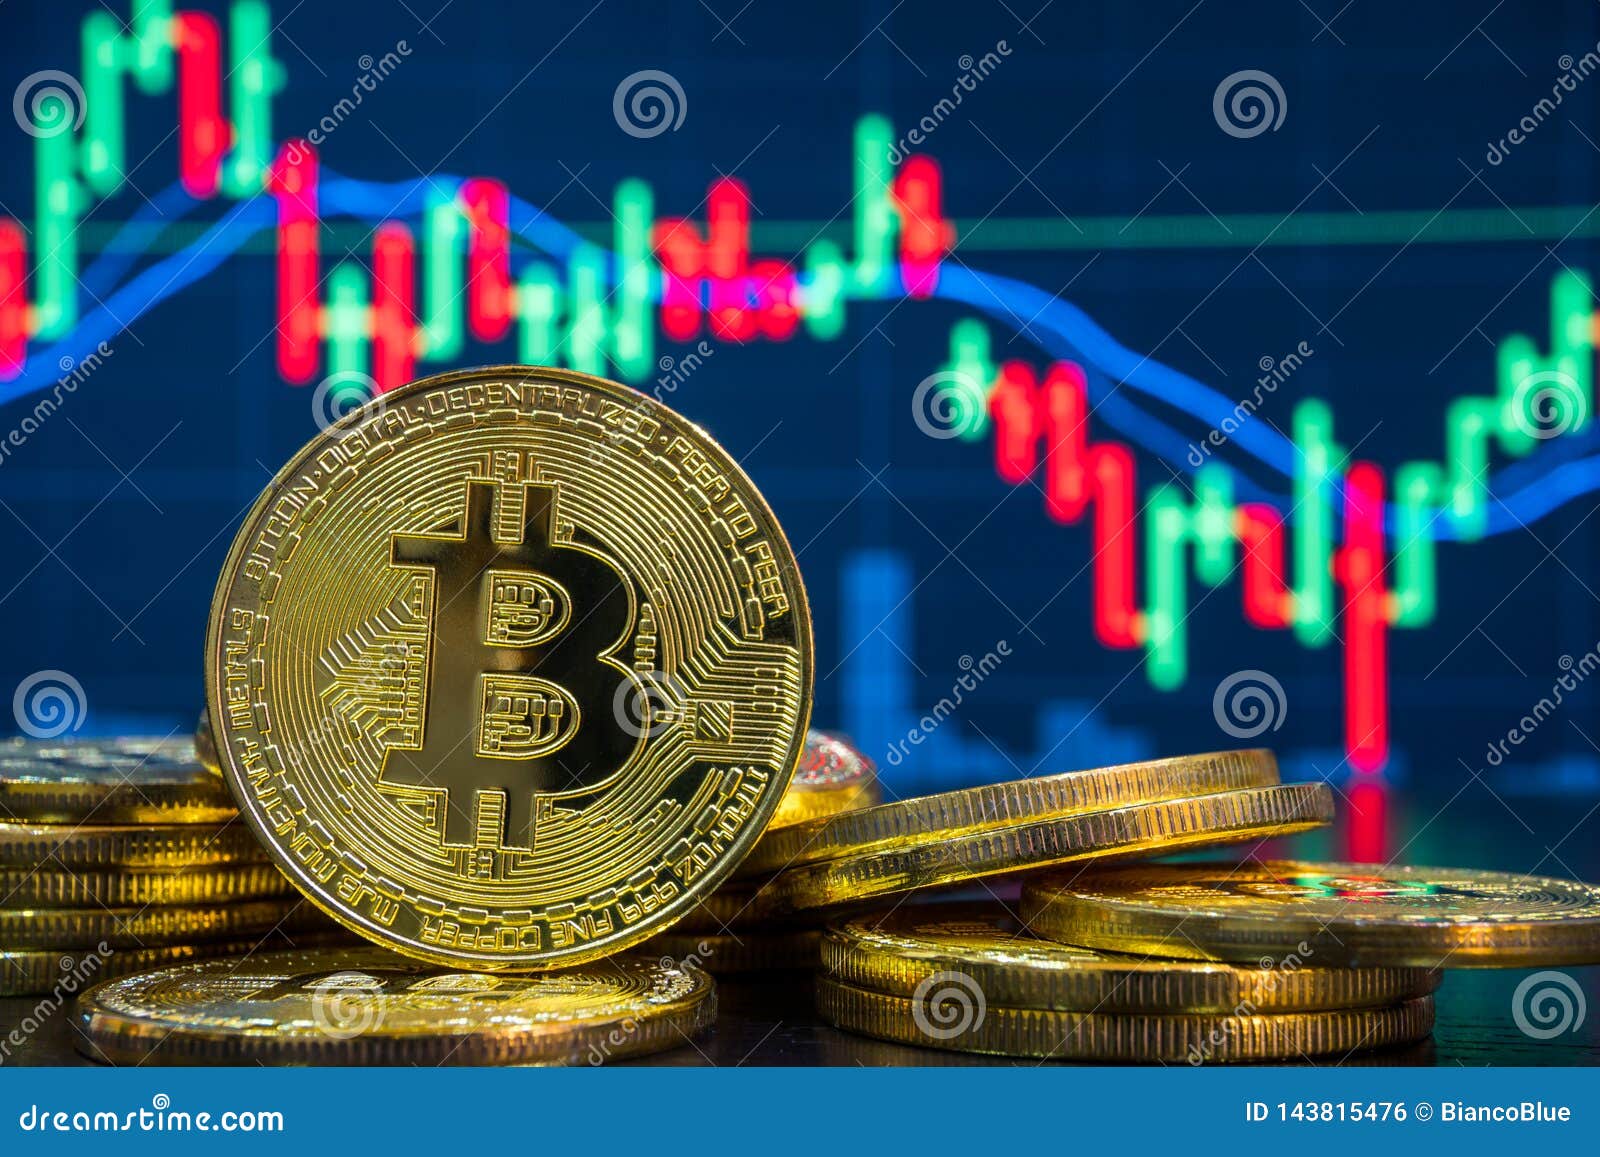 Bitcoin Market Capitalisation : 2. Ethereum (ETH)